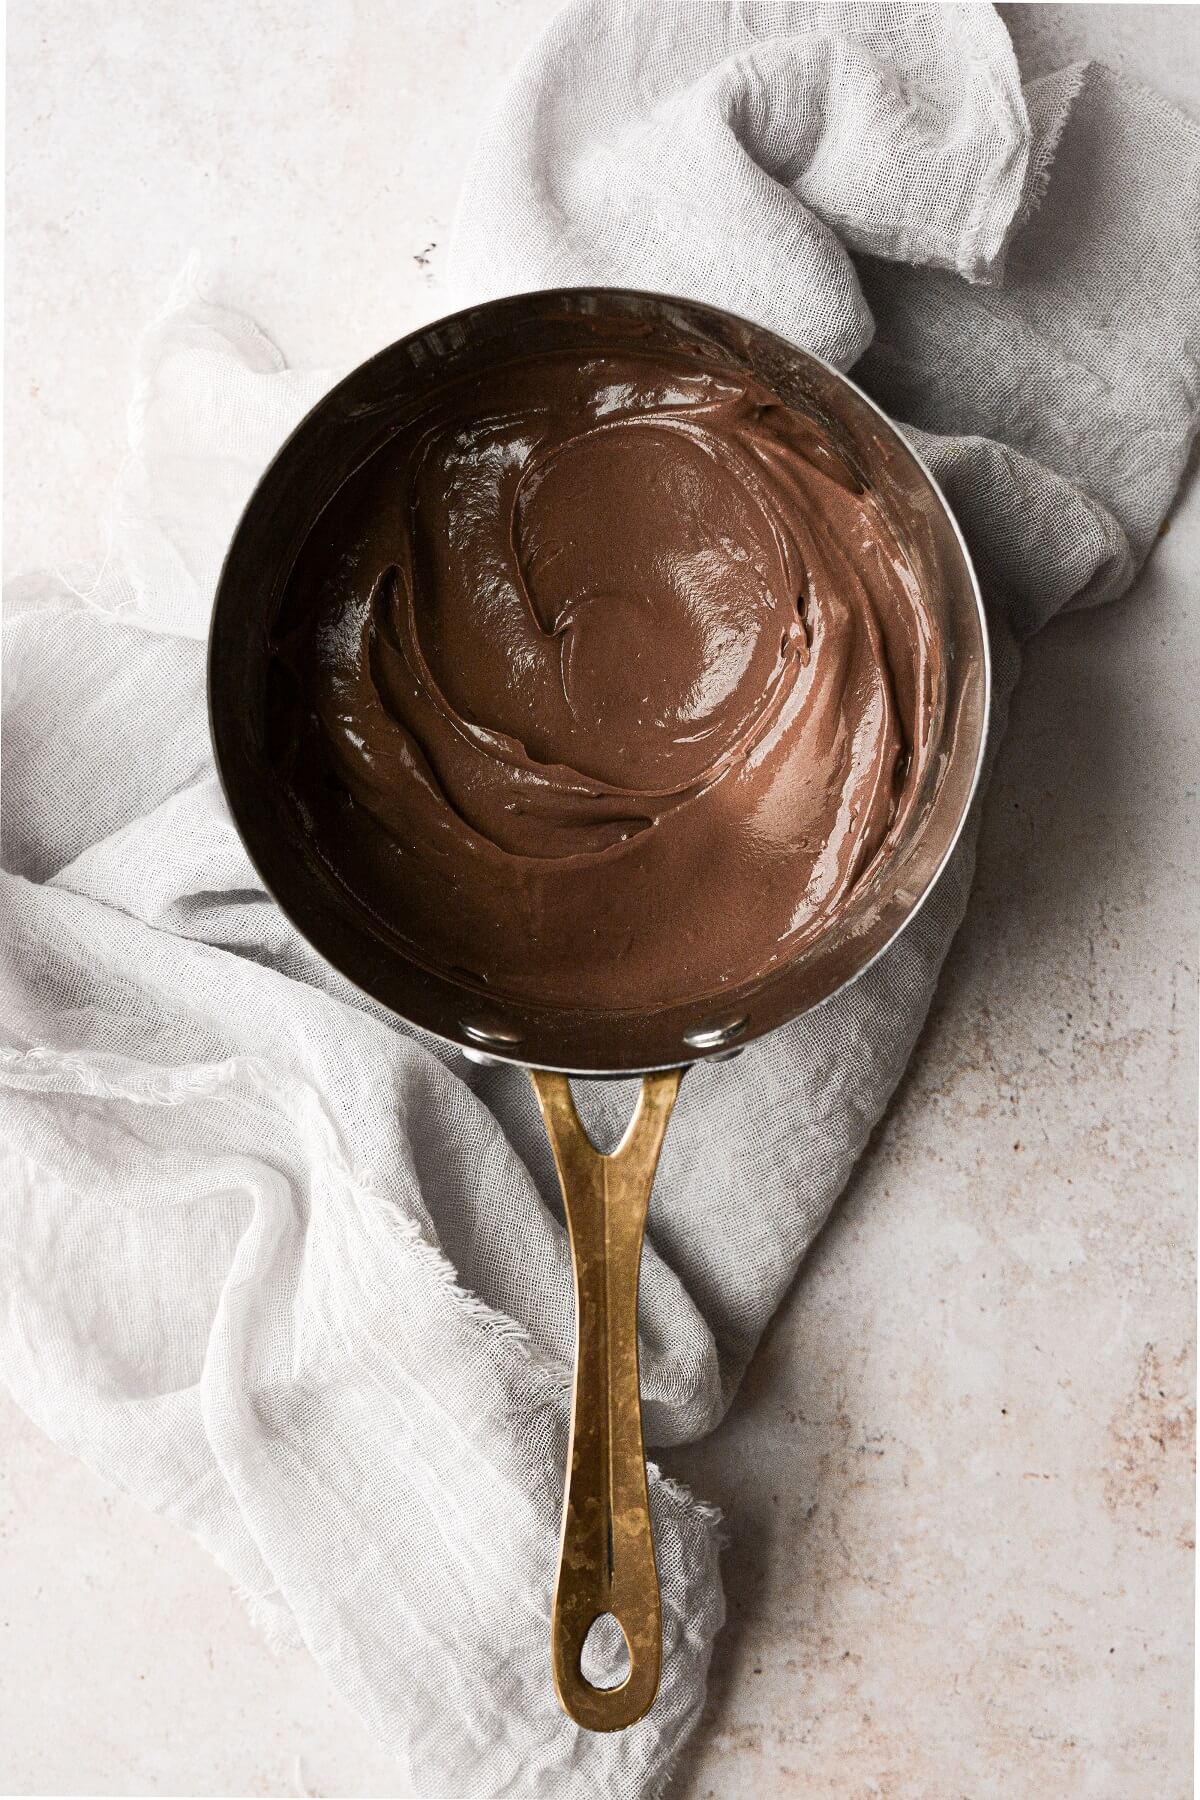 Chocolate custard in a saucepan.